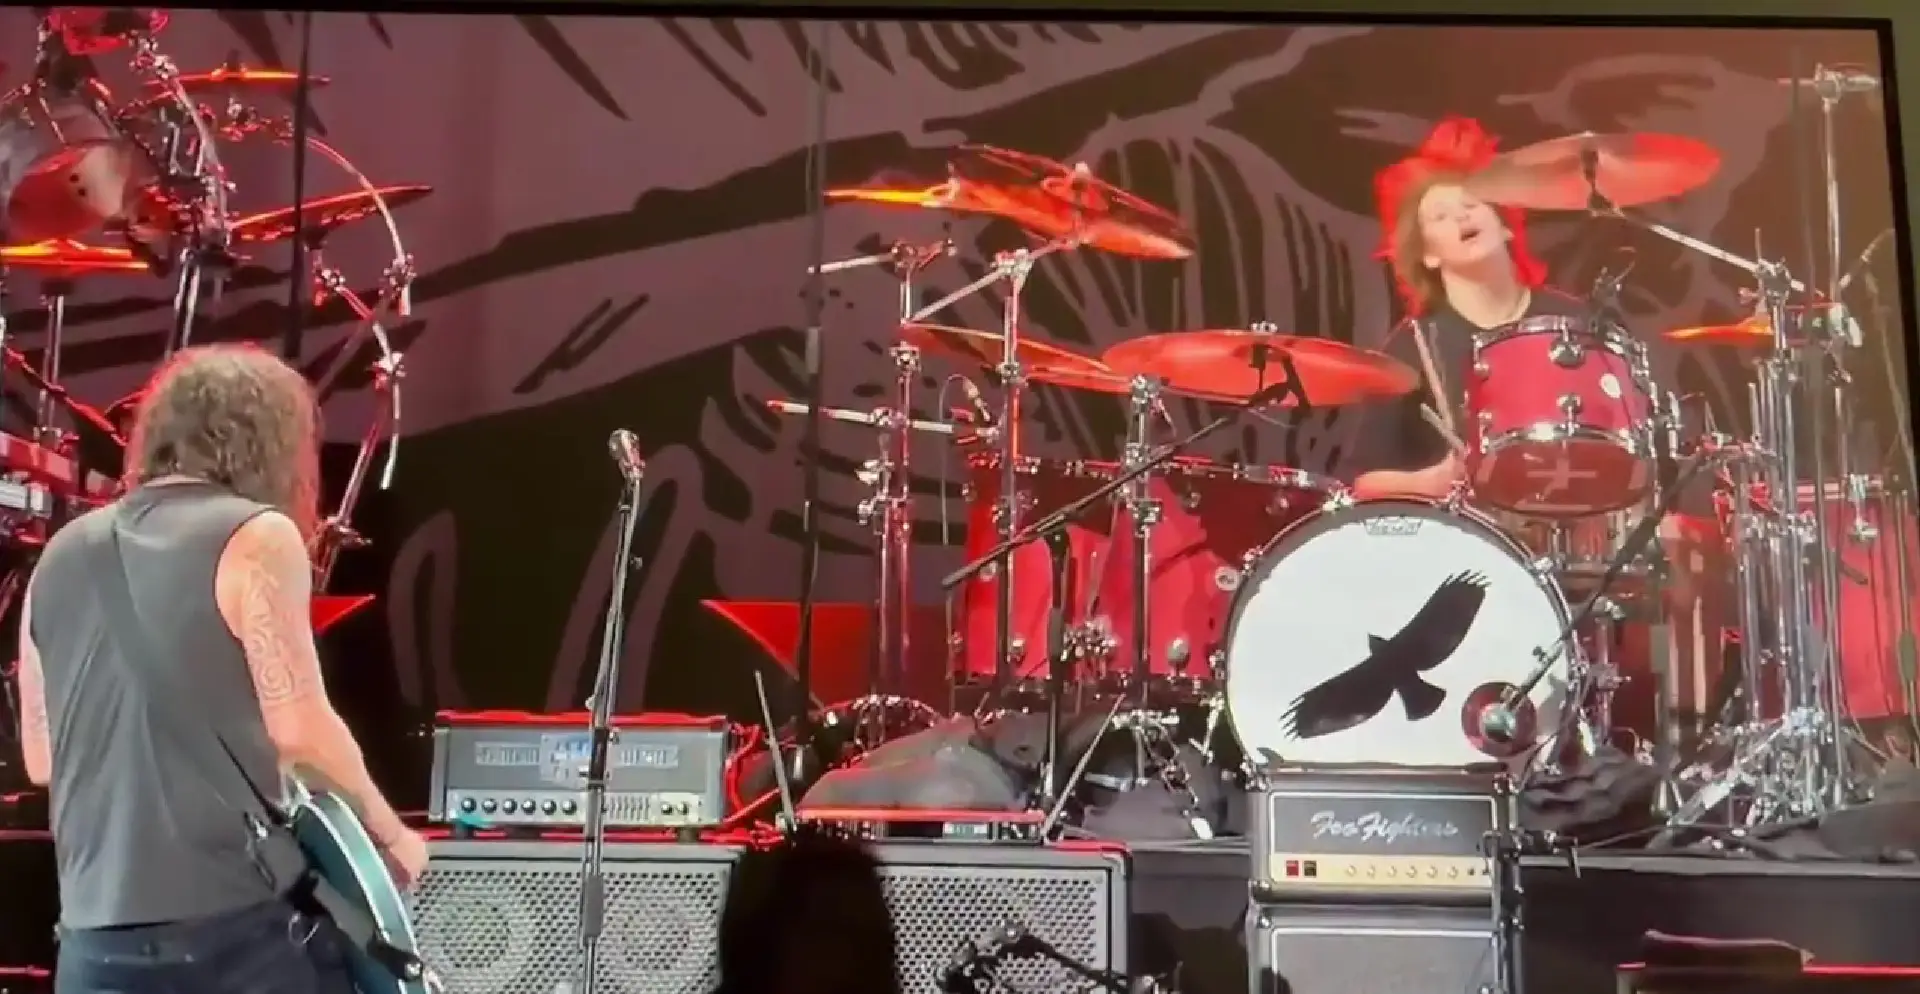 O momento emocionante em que o filho de Taylor Hawkins se juntou aos Foo Fighters para tocar ‘My Hero’ no Estádio de Wembley